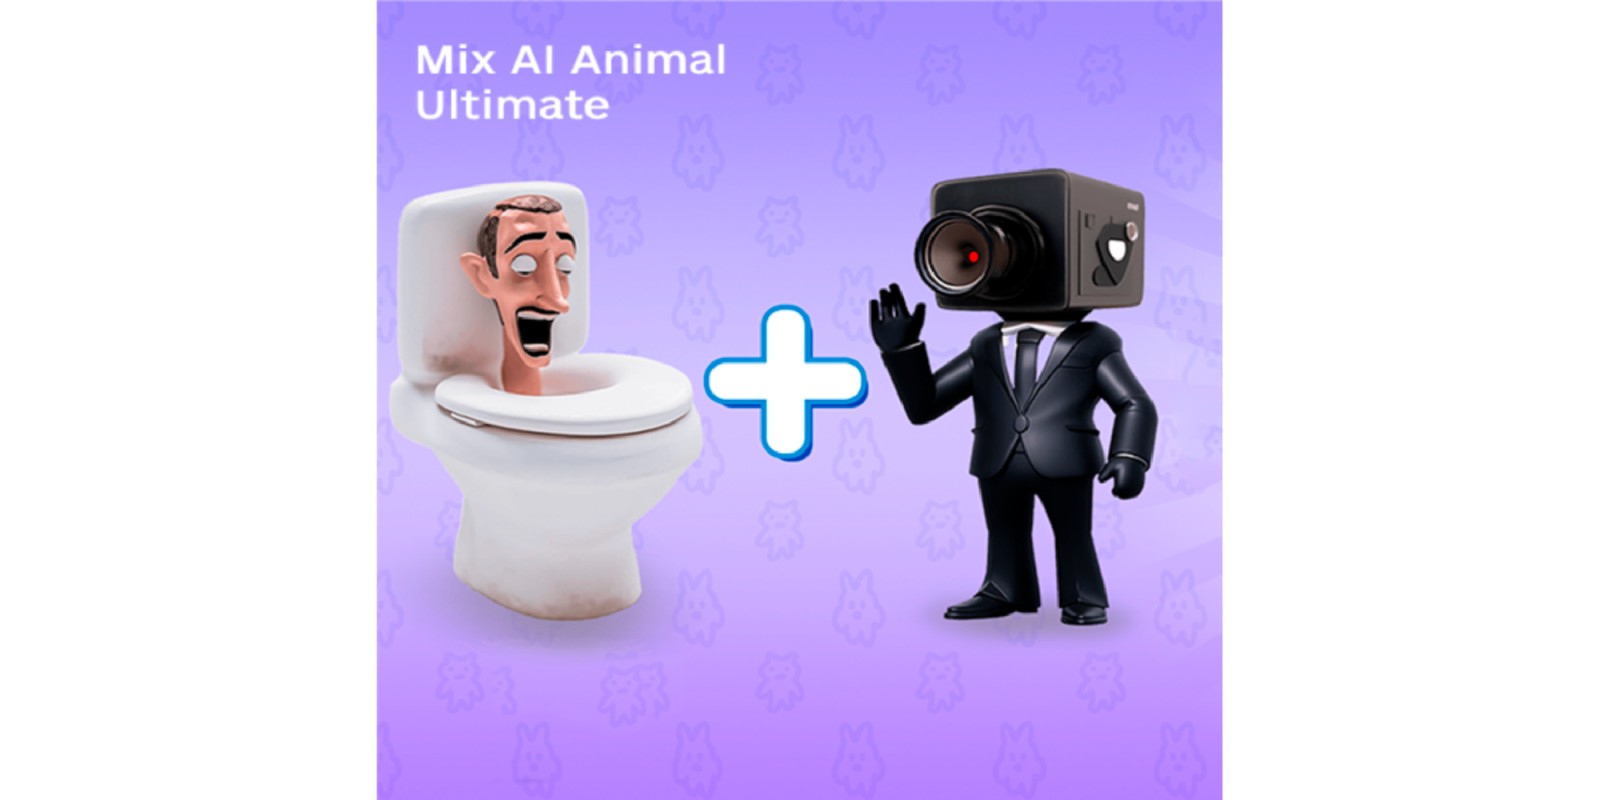 Mix AI Animal Ultimate